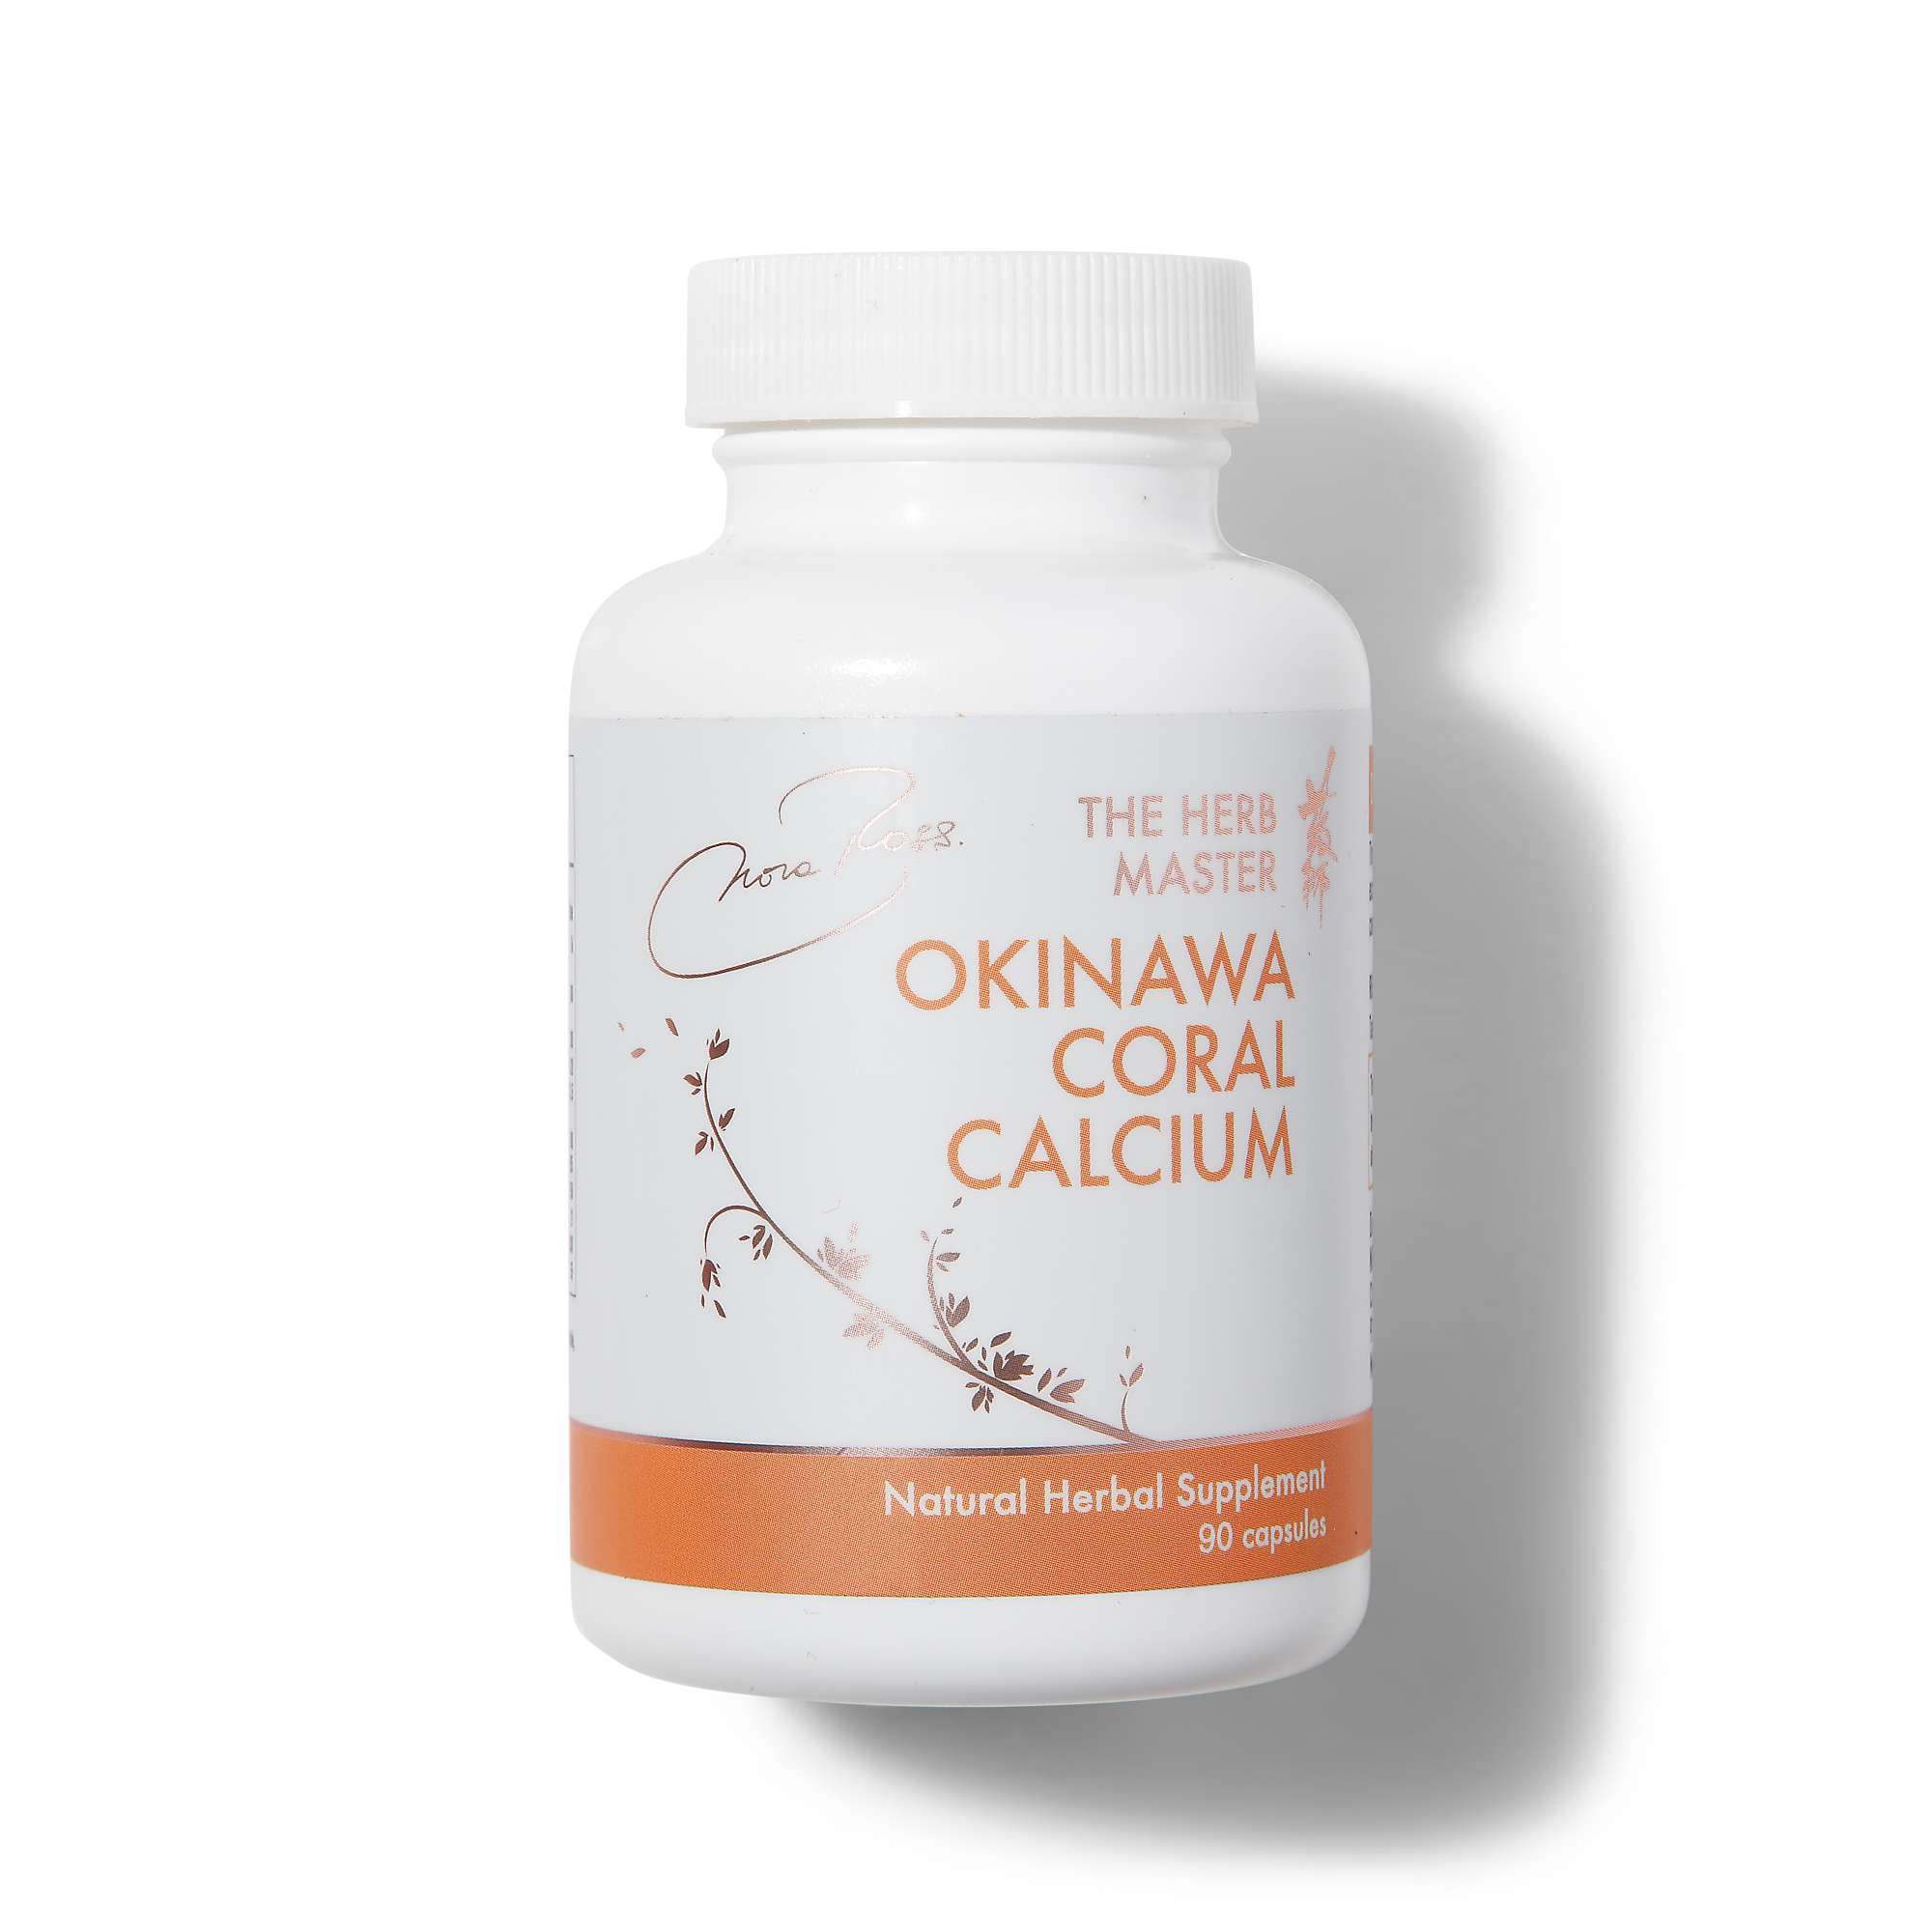 Okinawa Coral Calcium Supplements (60 count) - Immune & Supporting Bone Health with Magnesium, Zinc, Potassium, Vitamins & Minerals